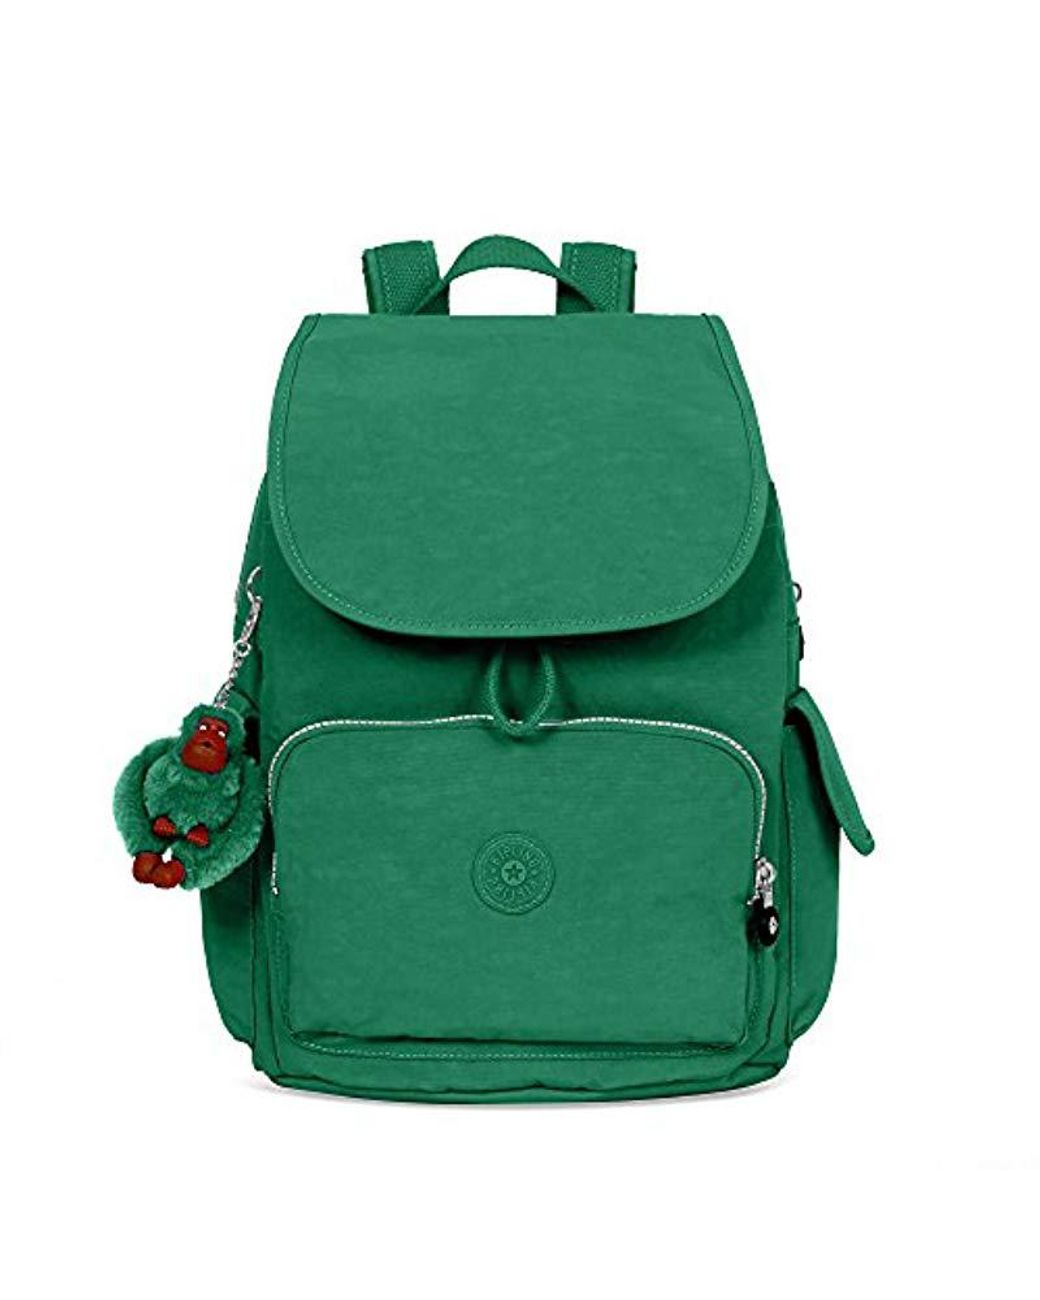 Kipling City Pack Backpack in Crocodile Green (Green) | Lyst